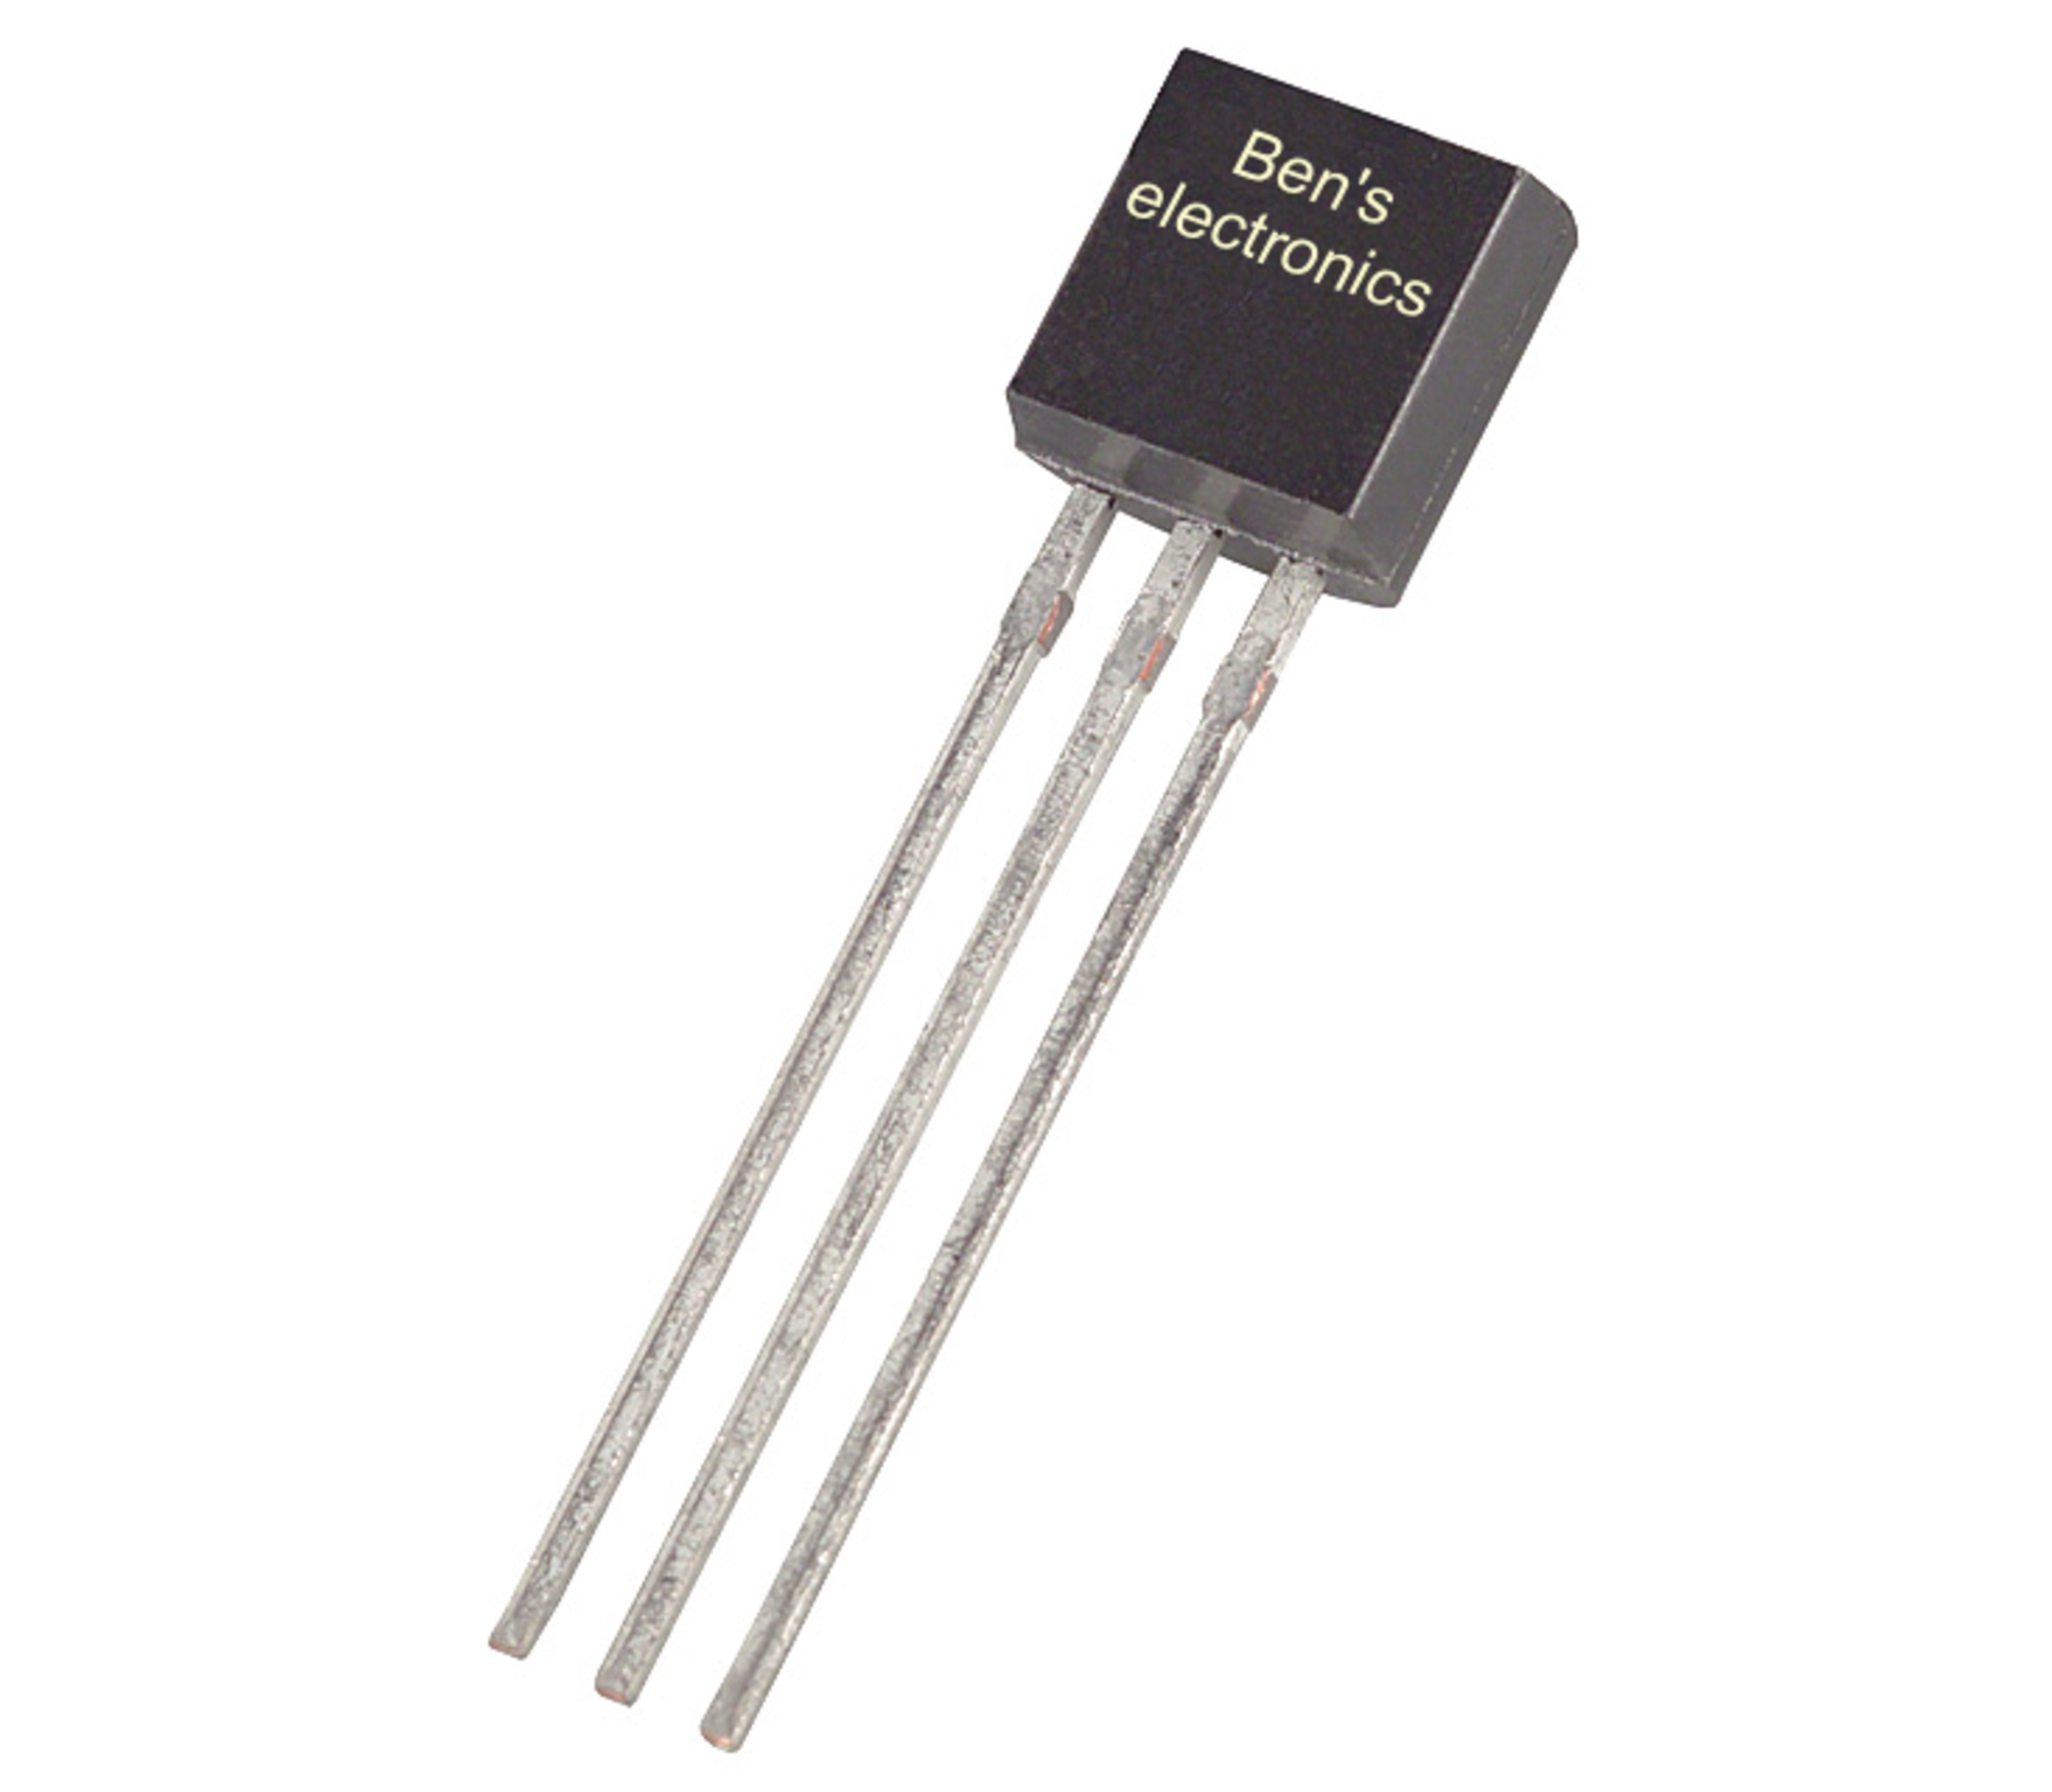 2N3904 transistor